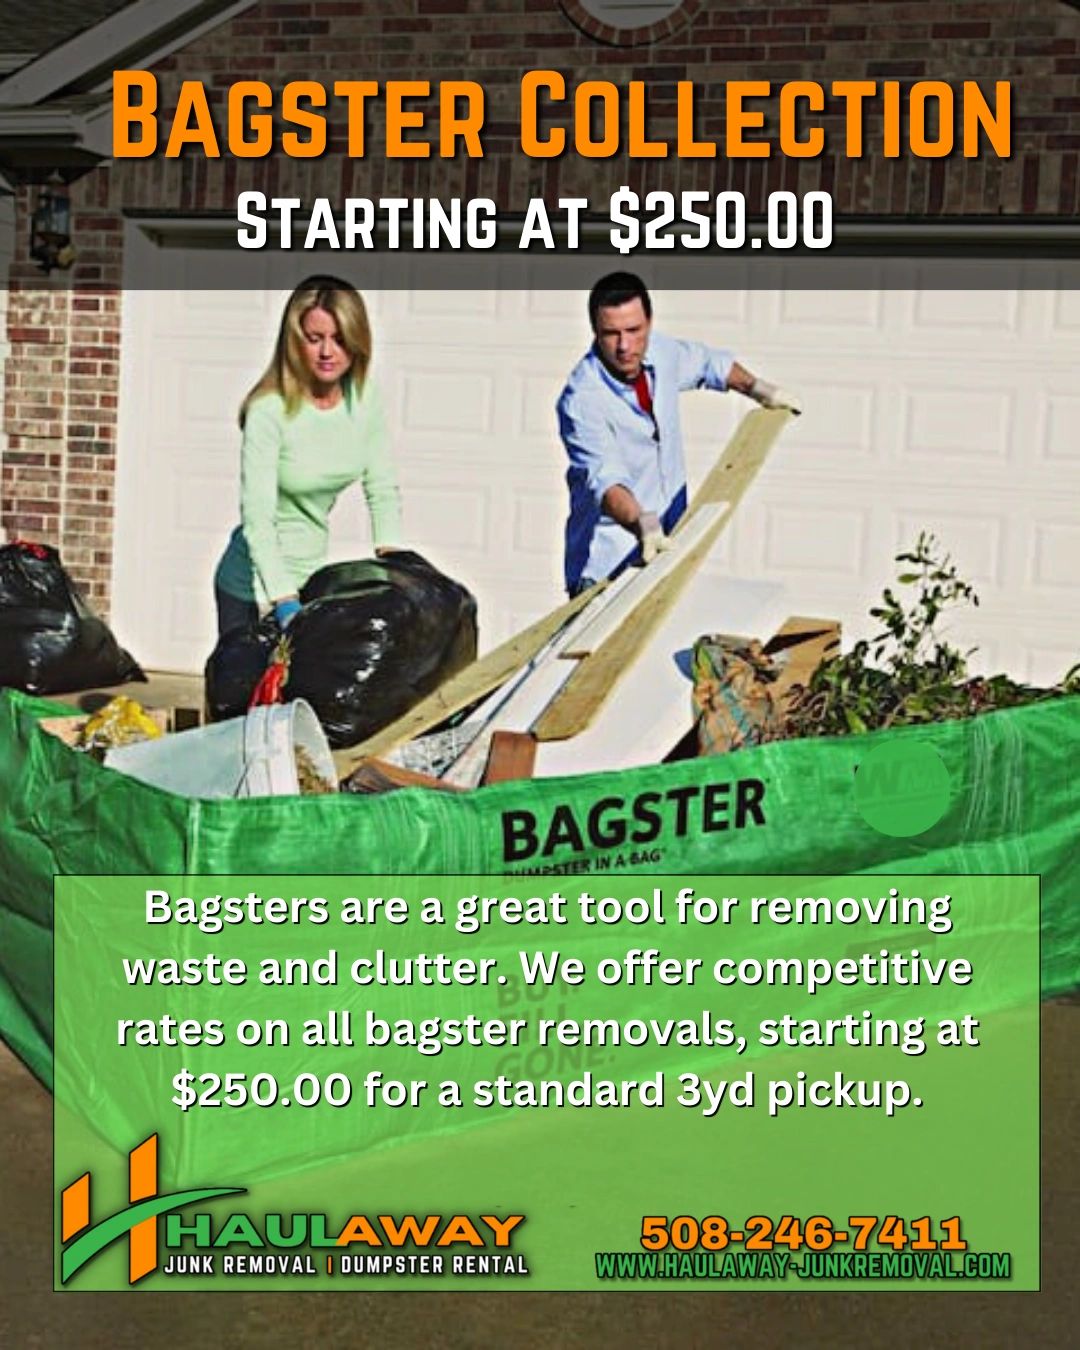 Dumpster Rentals vs Bagsters